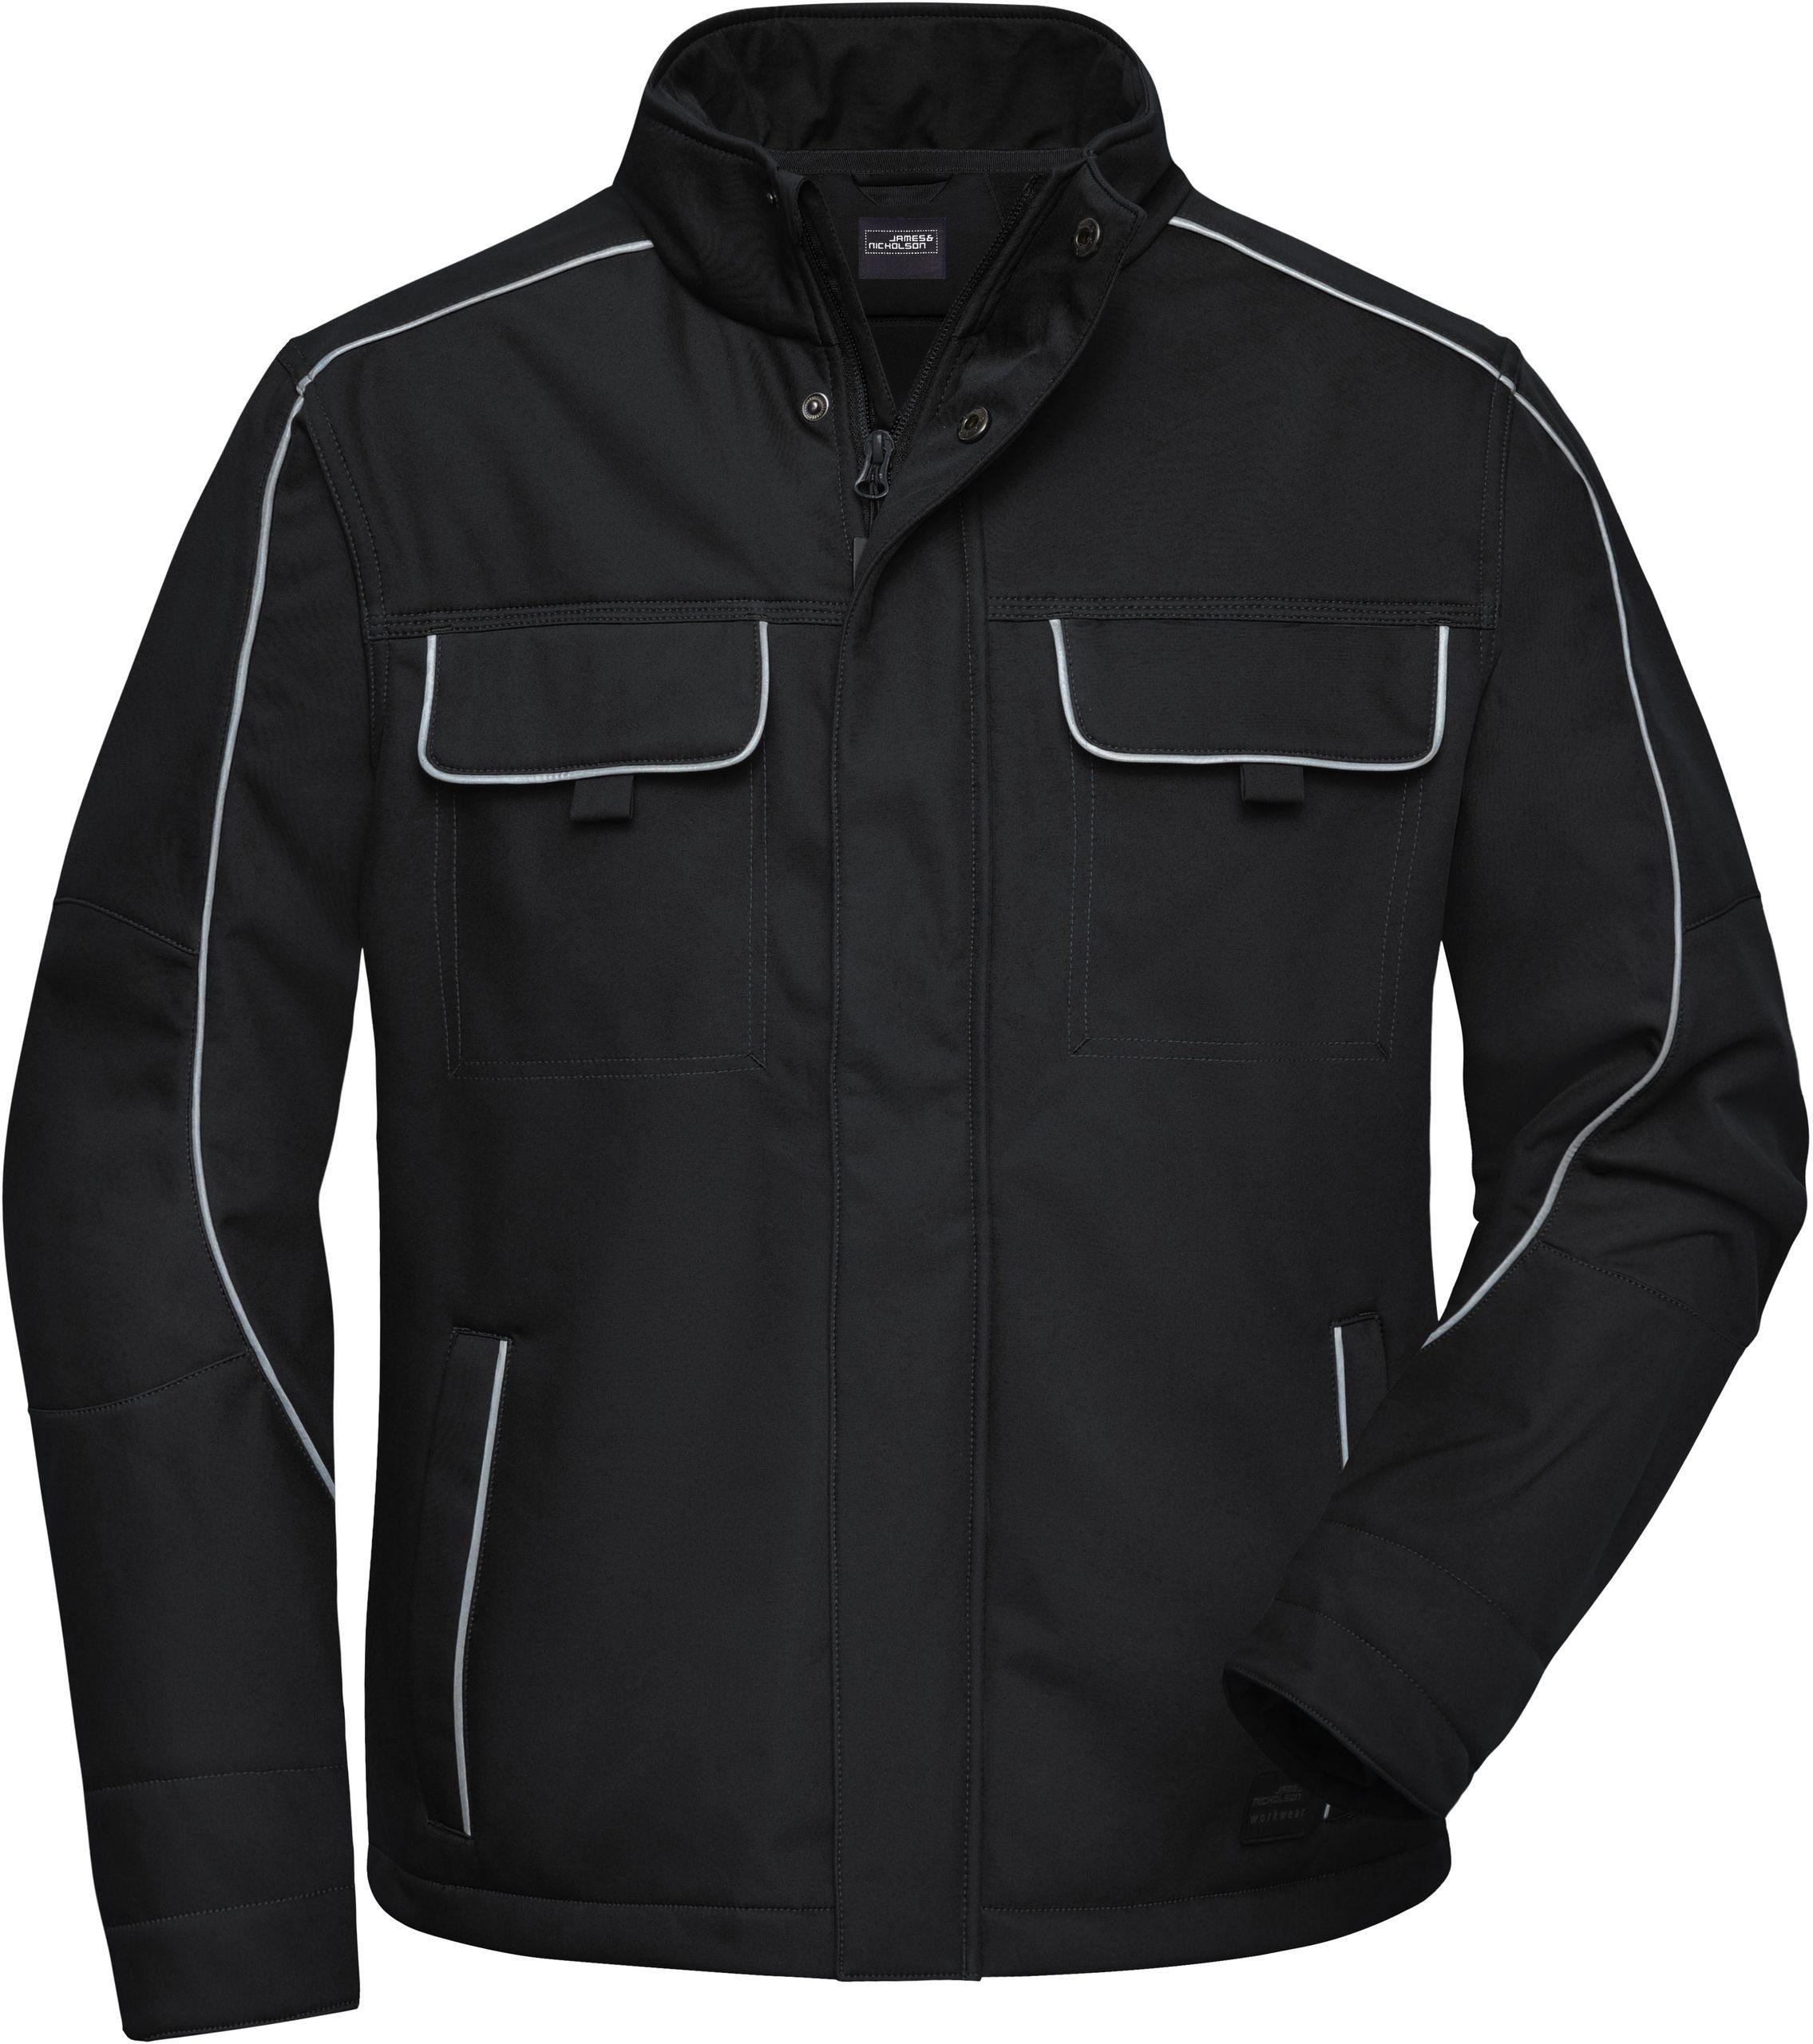 James & FaS50884 Black auch Nicholson Workwear Jacke Softshell Softshelljacke Übergröße in